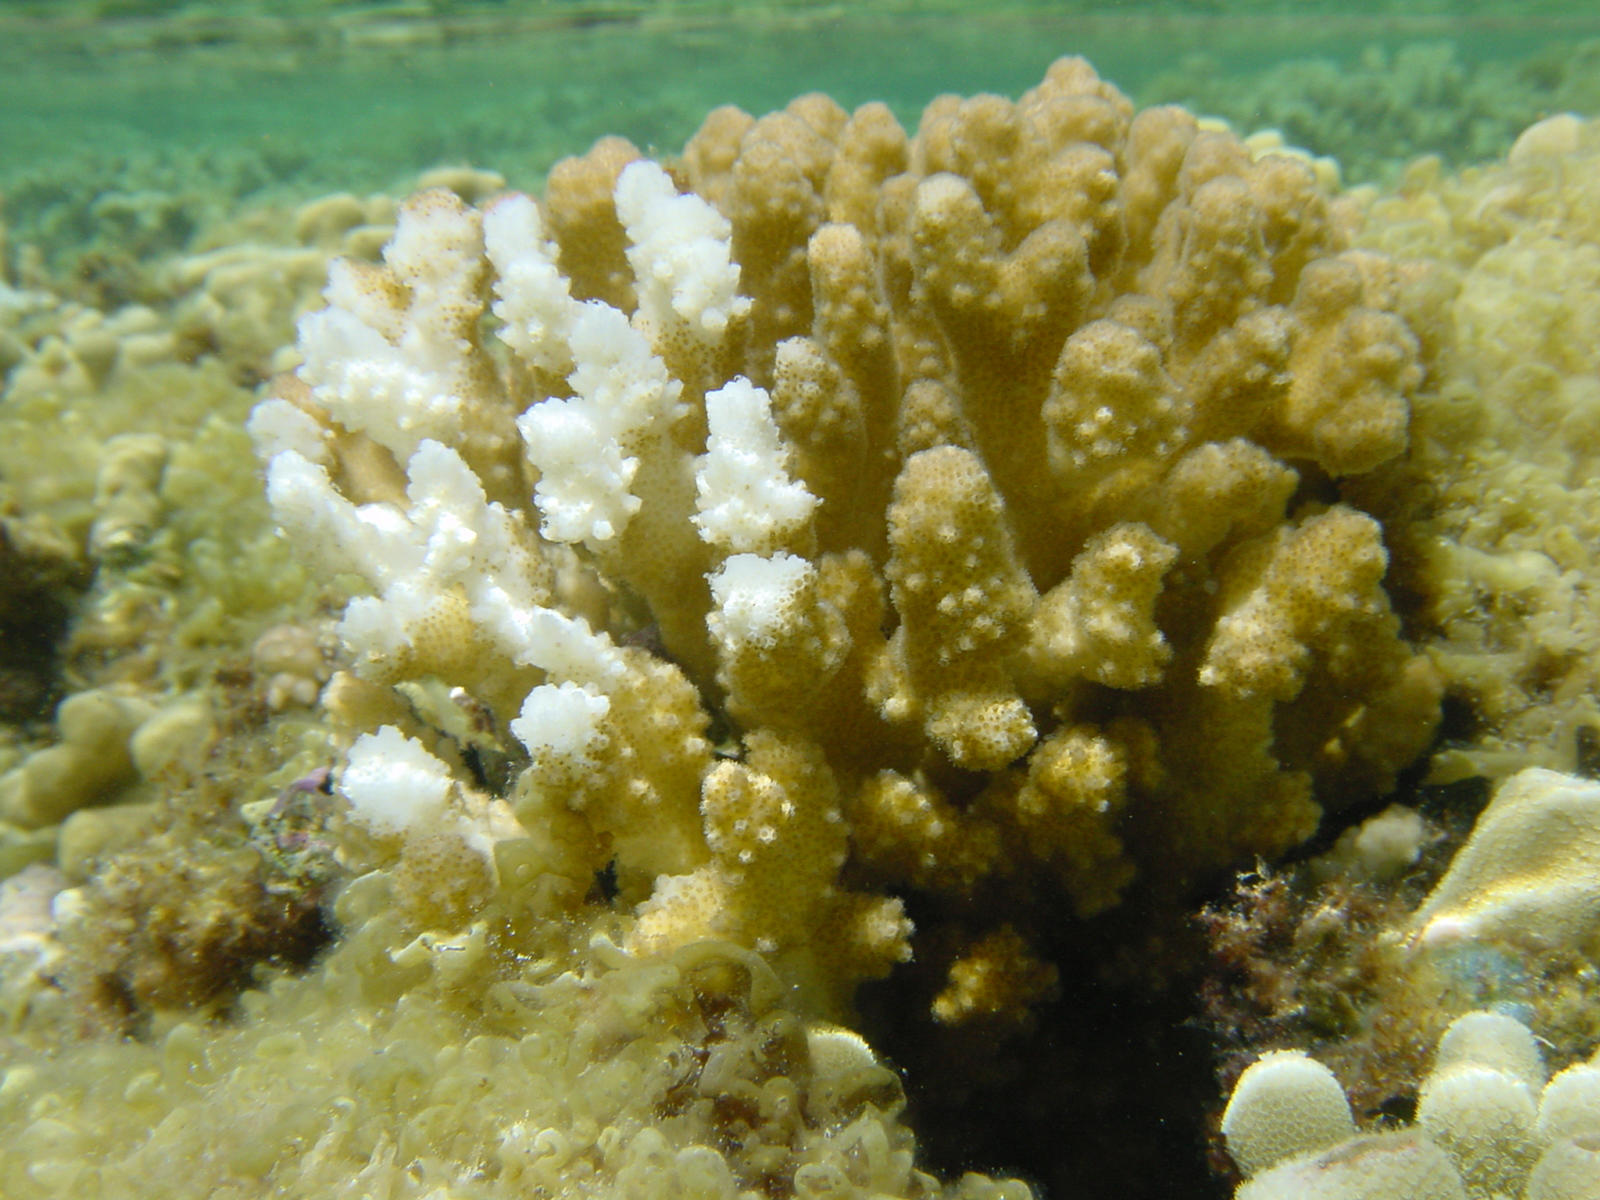 The White Stuff: Marine Lab Team Seeks to Understand Coral